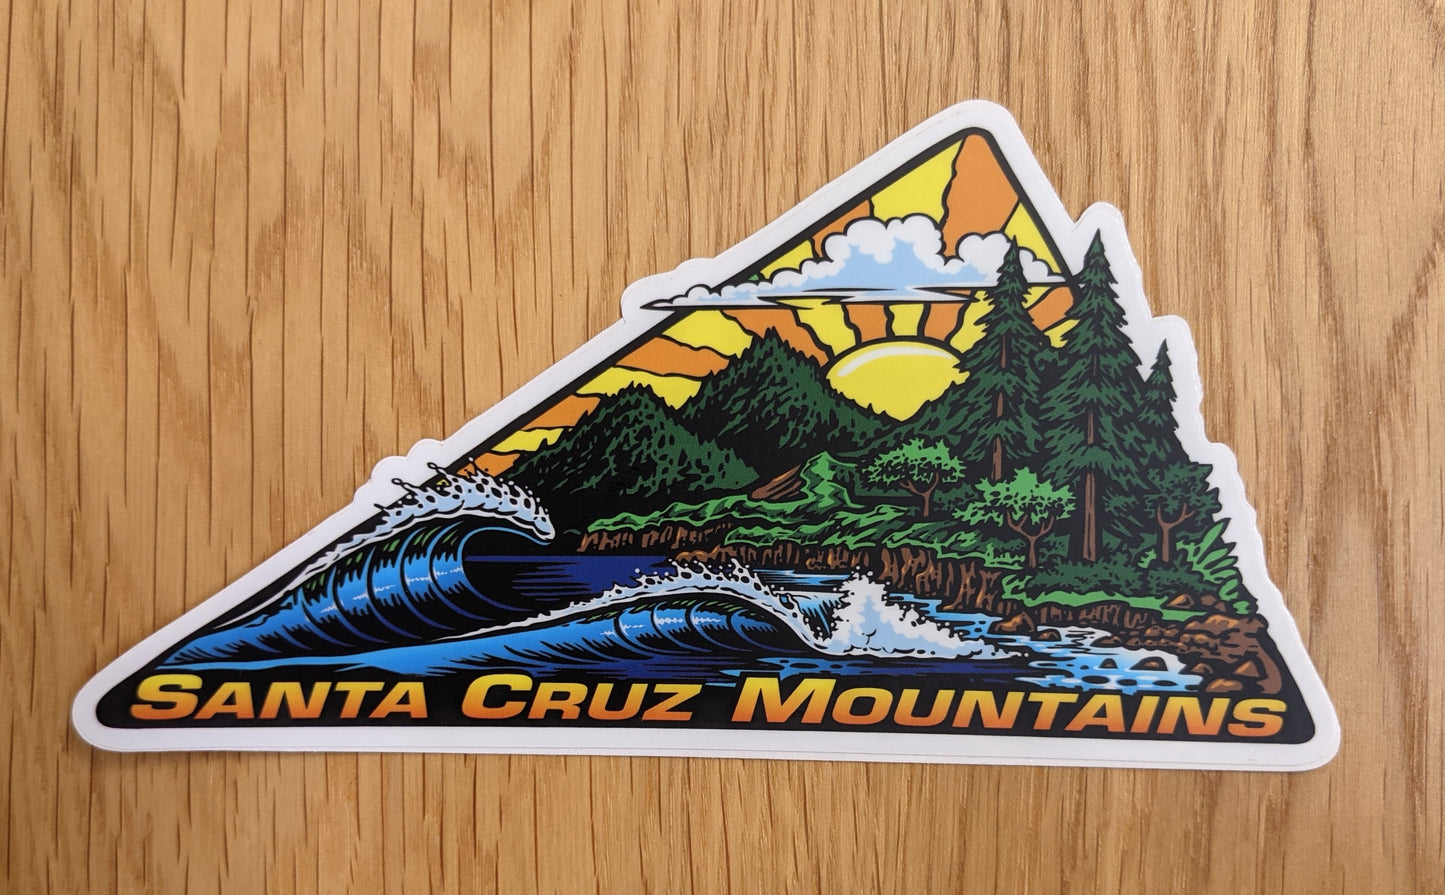 SCM Clothing logo sticker in full color reading "Santa Cruz Mountains"